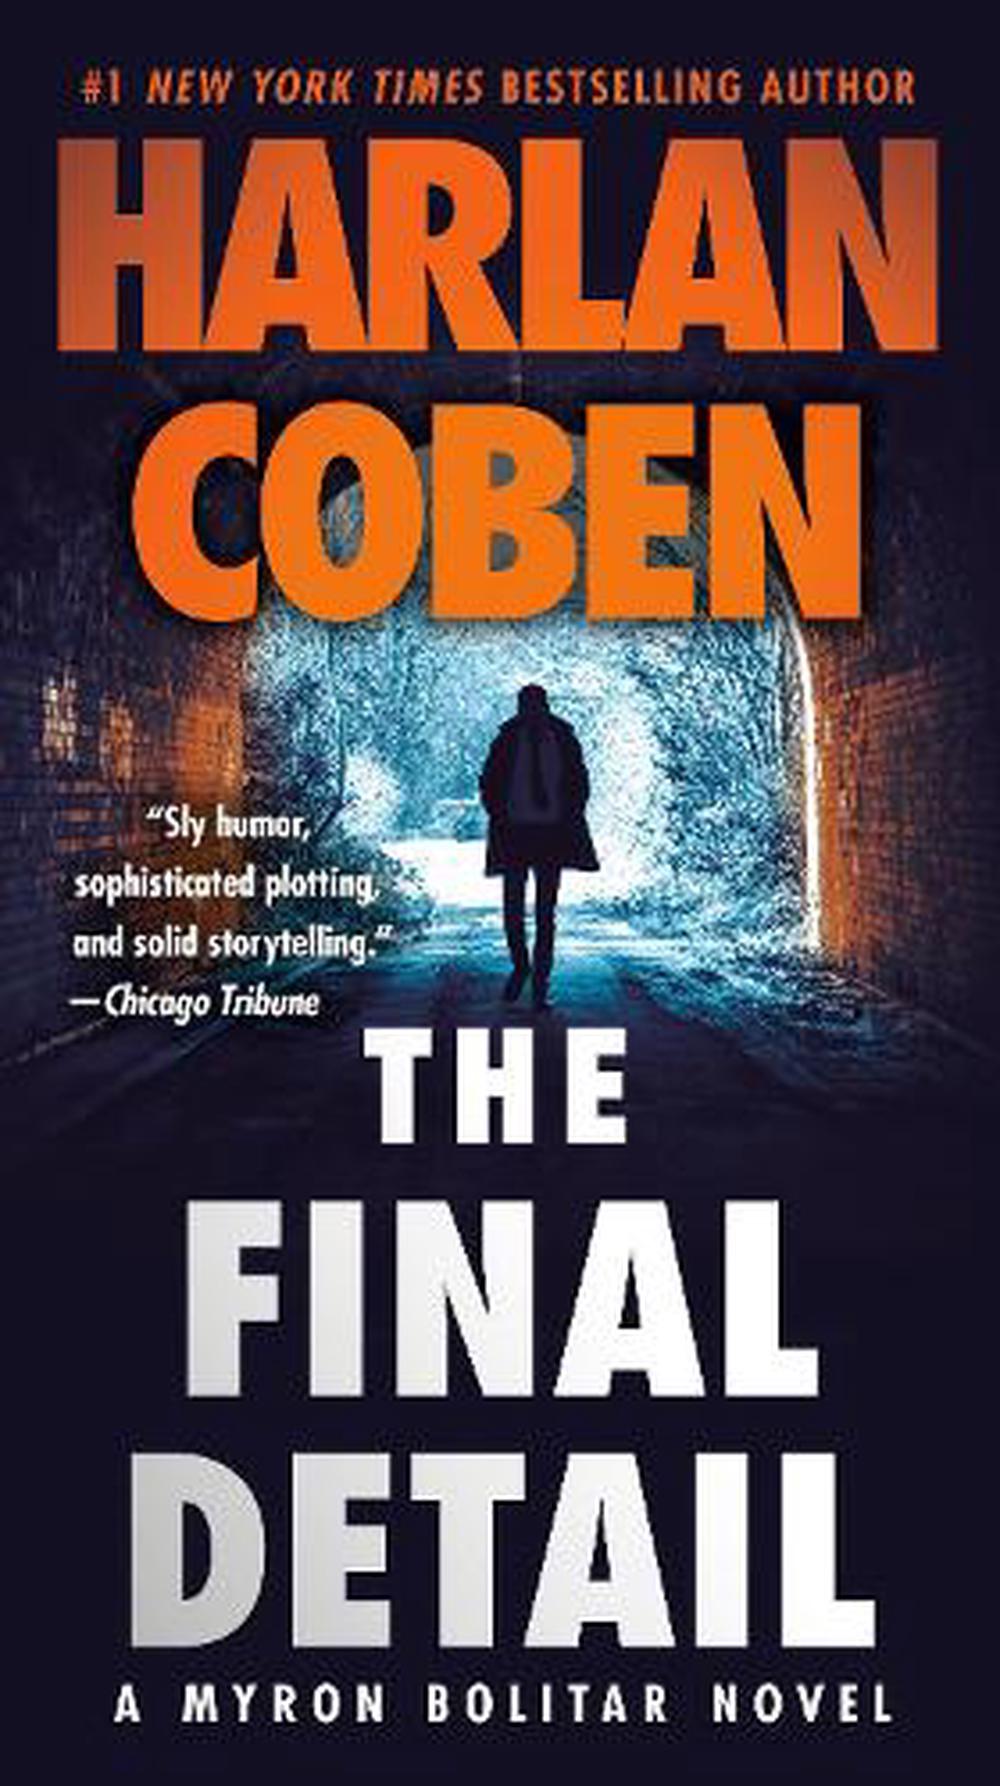 the-final-detail-by-harlan-coben-paperback-9780440246336-buy-online